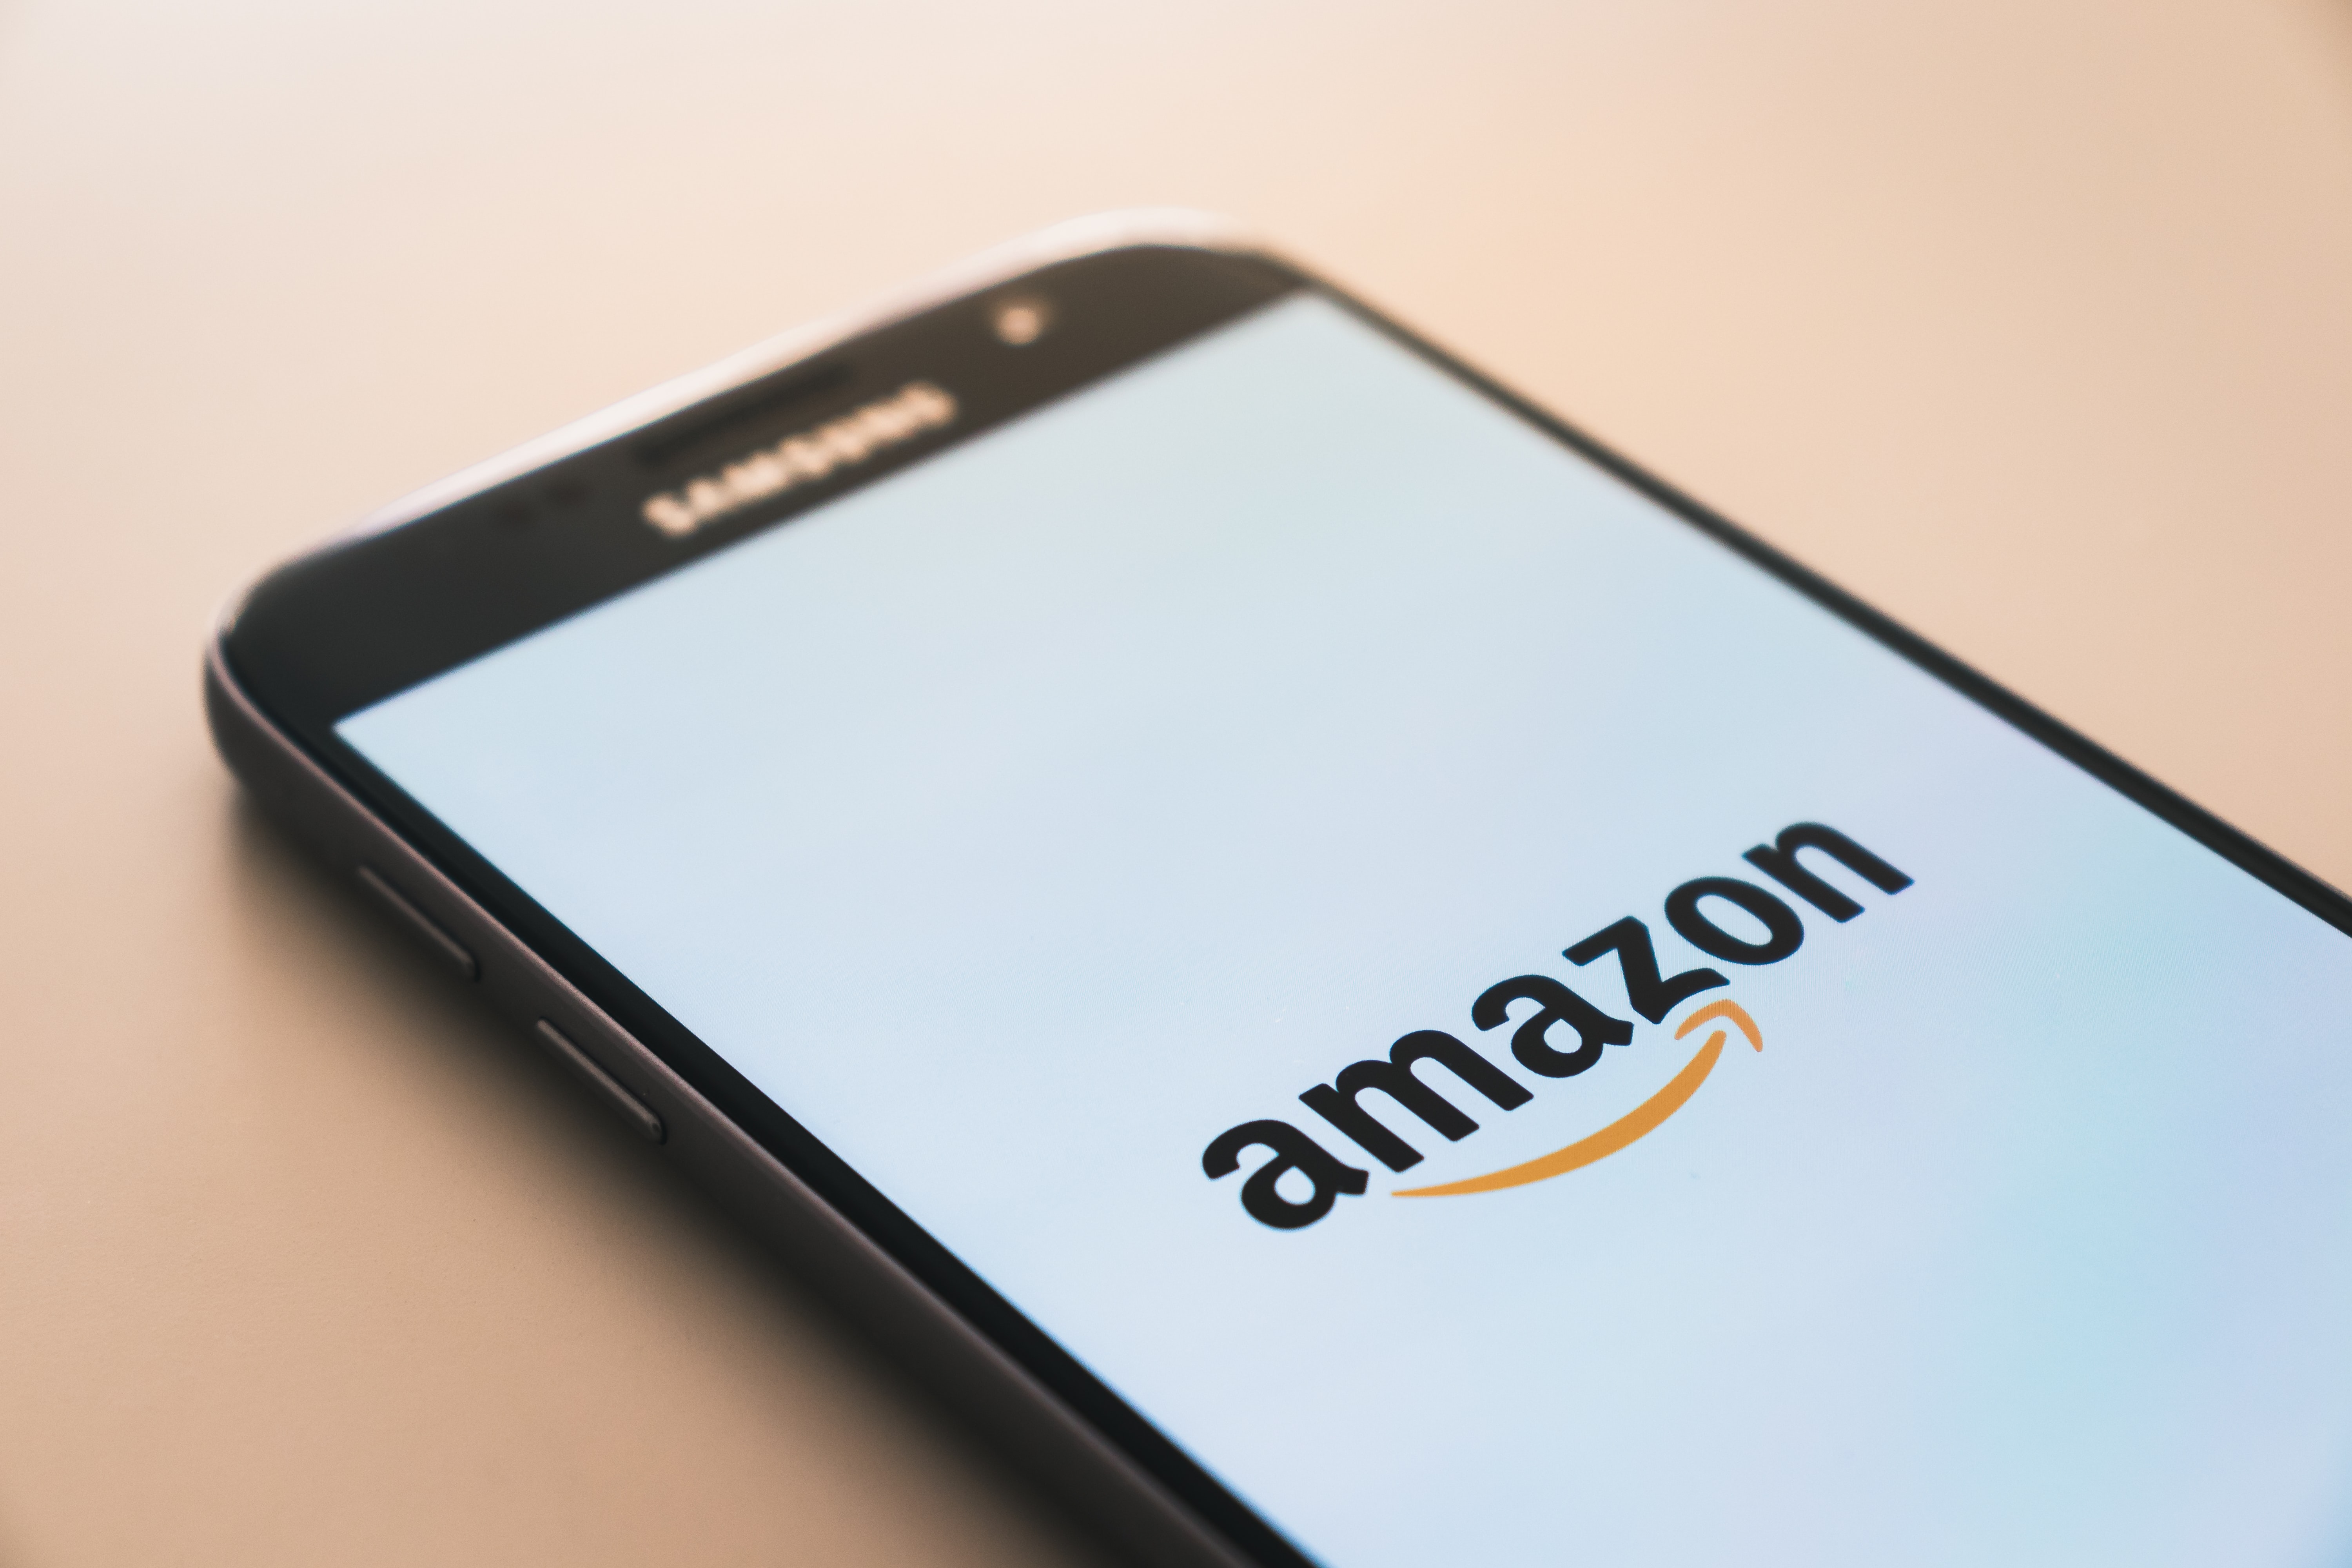 Amazon logo on a smartphone screen